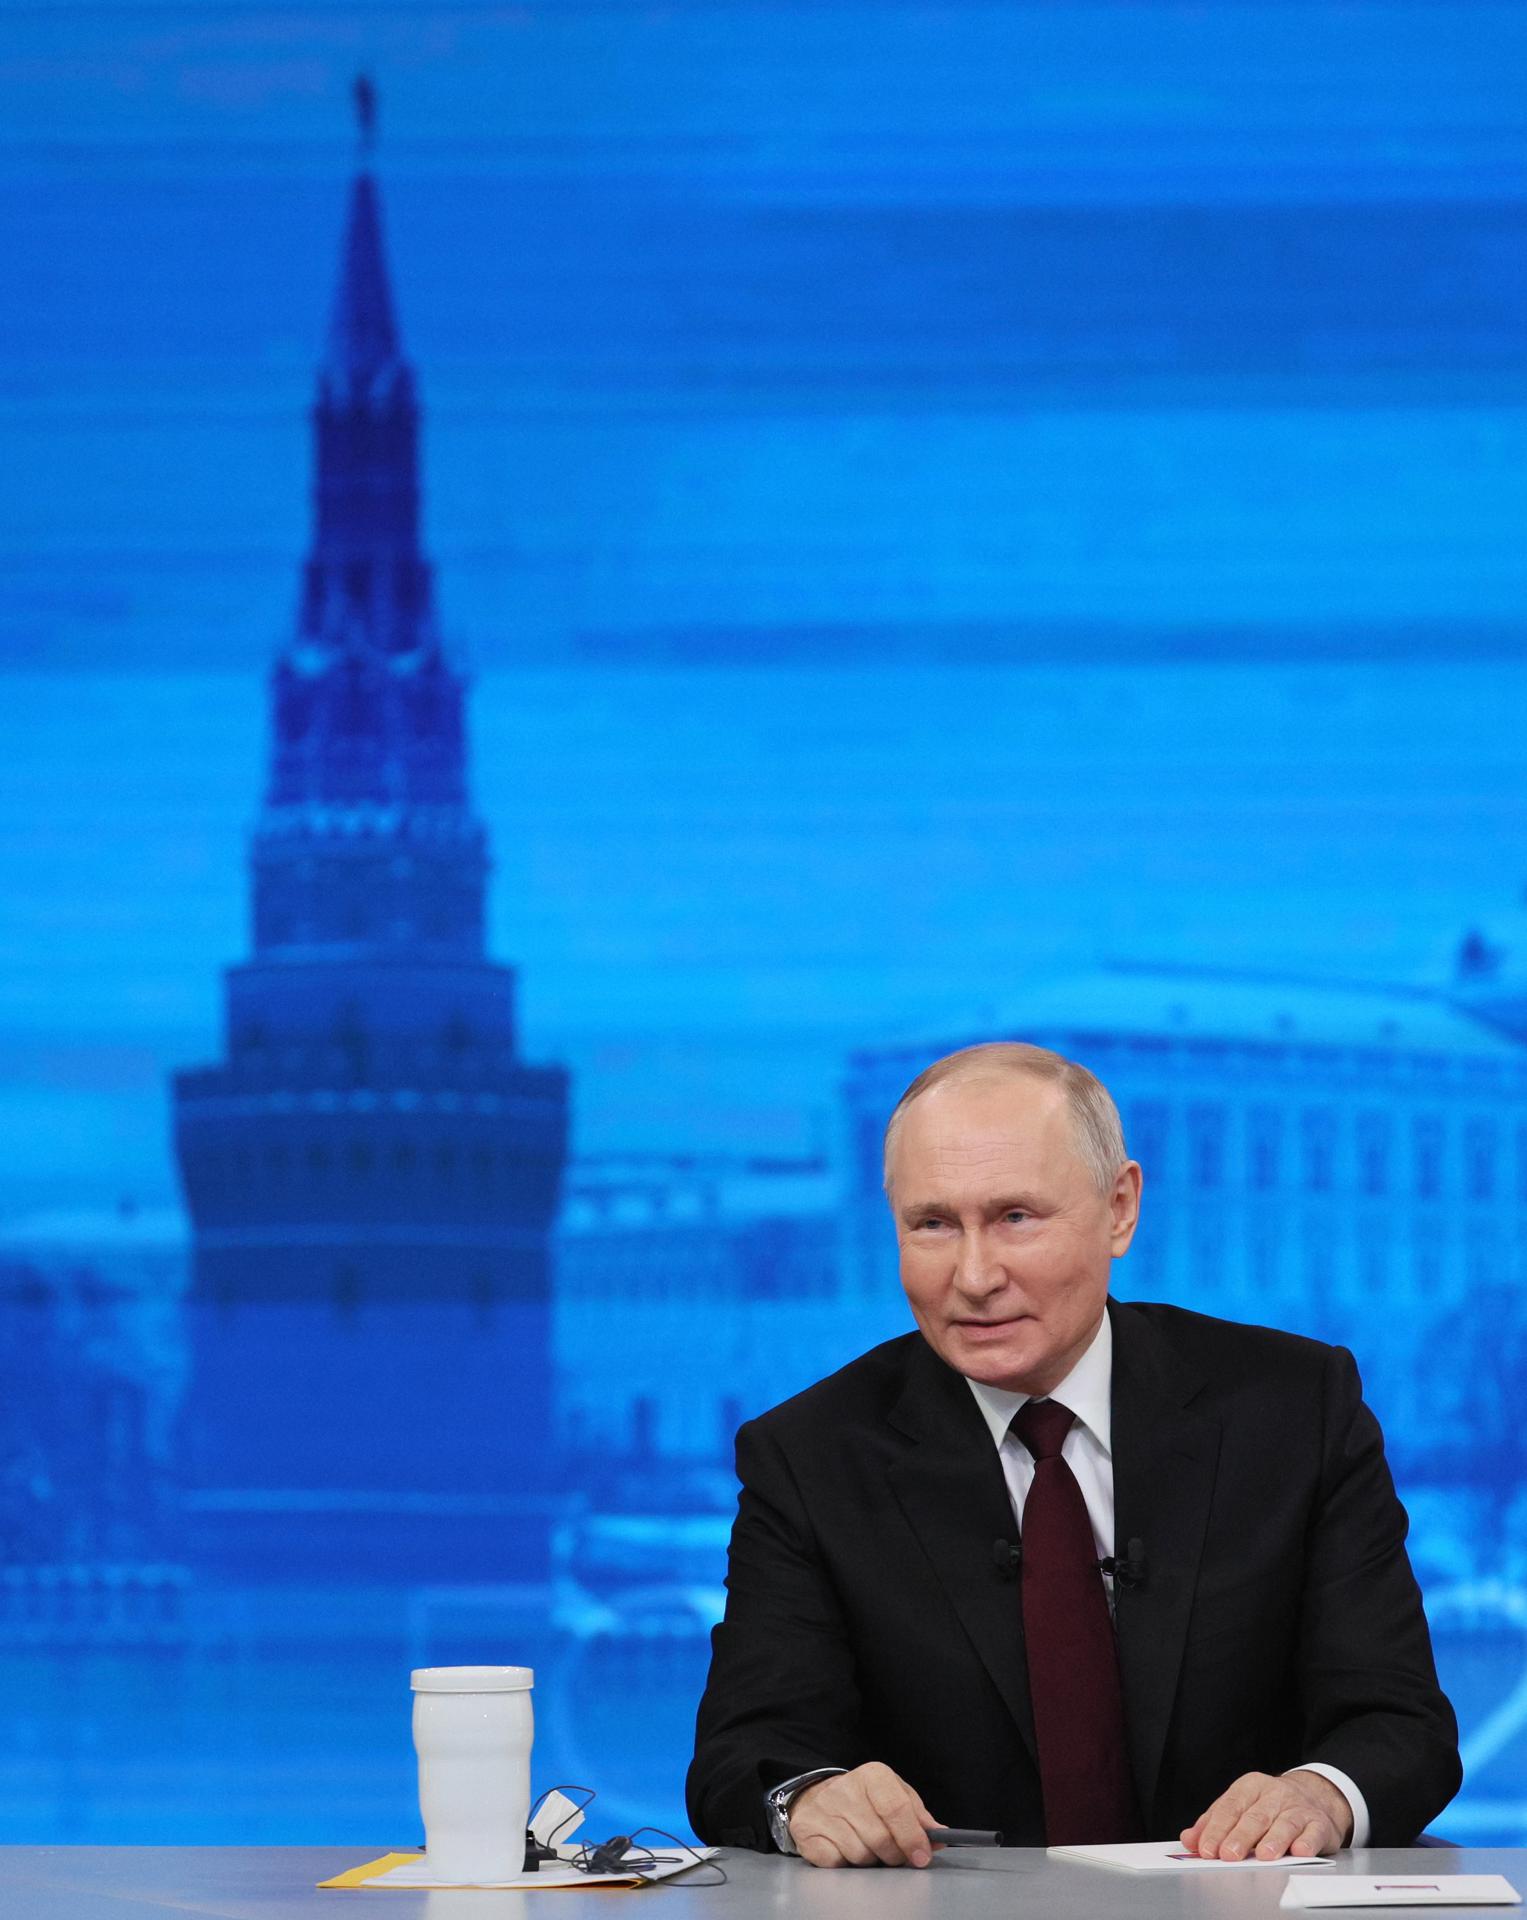 RUSIA. Vladimir Putin reapareció en público